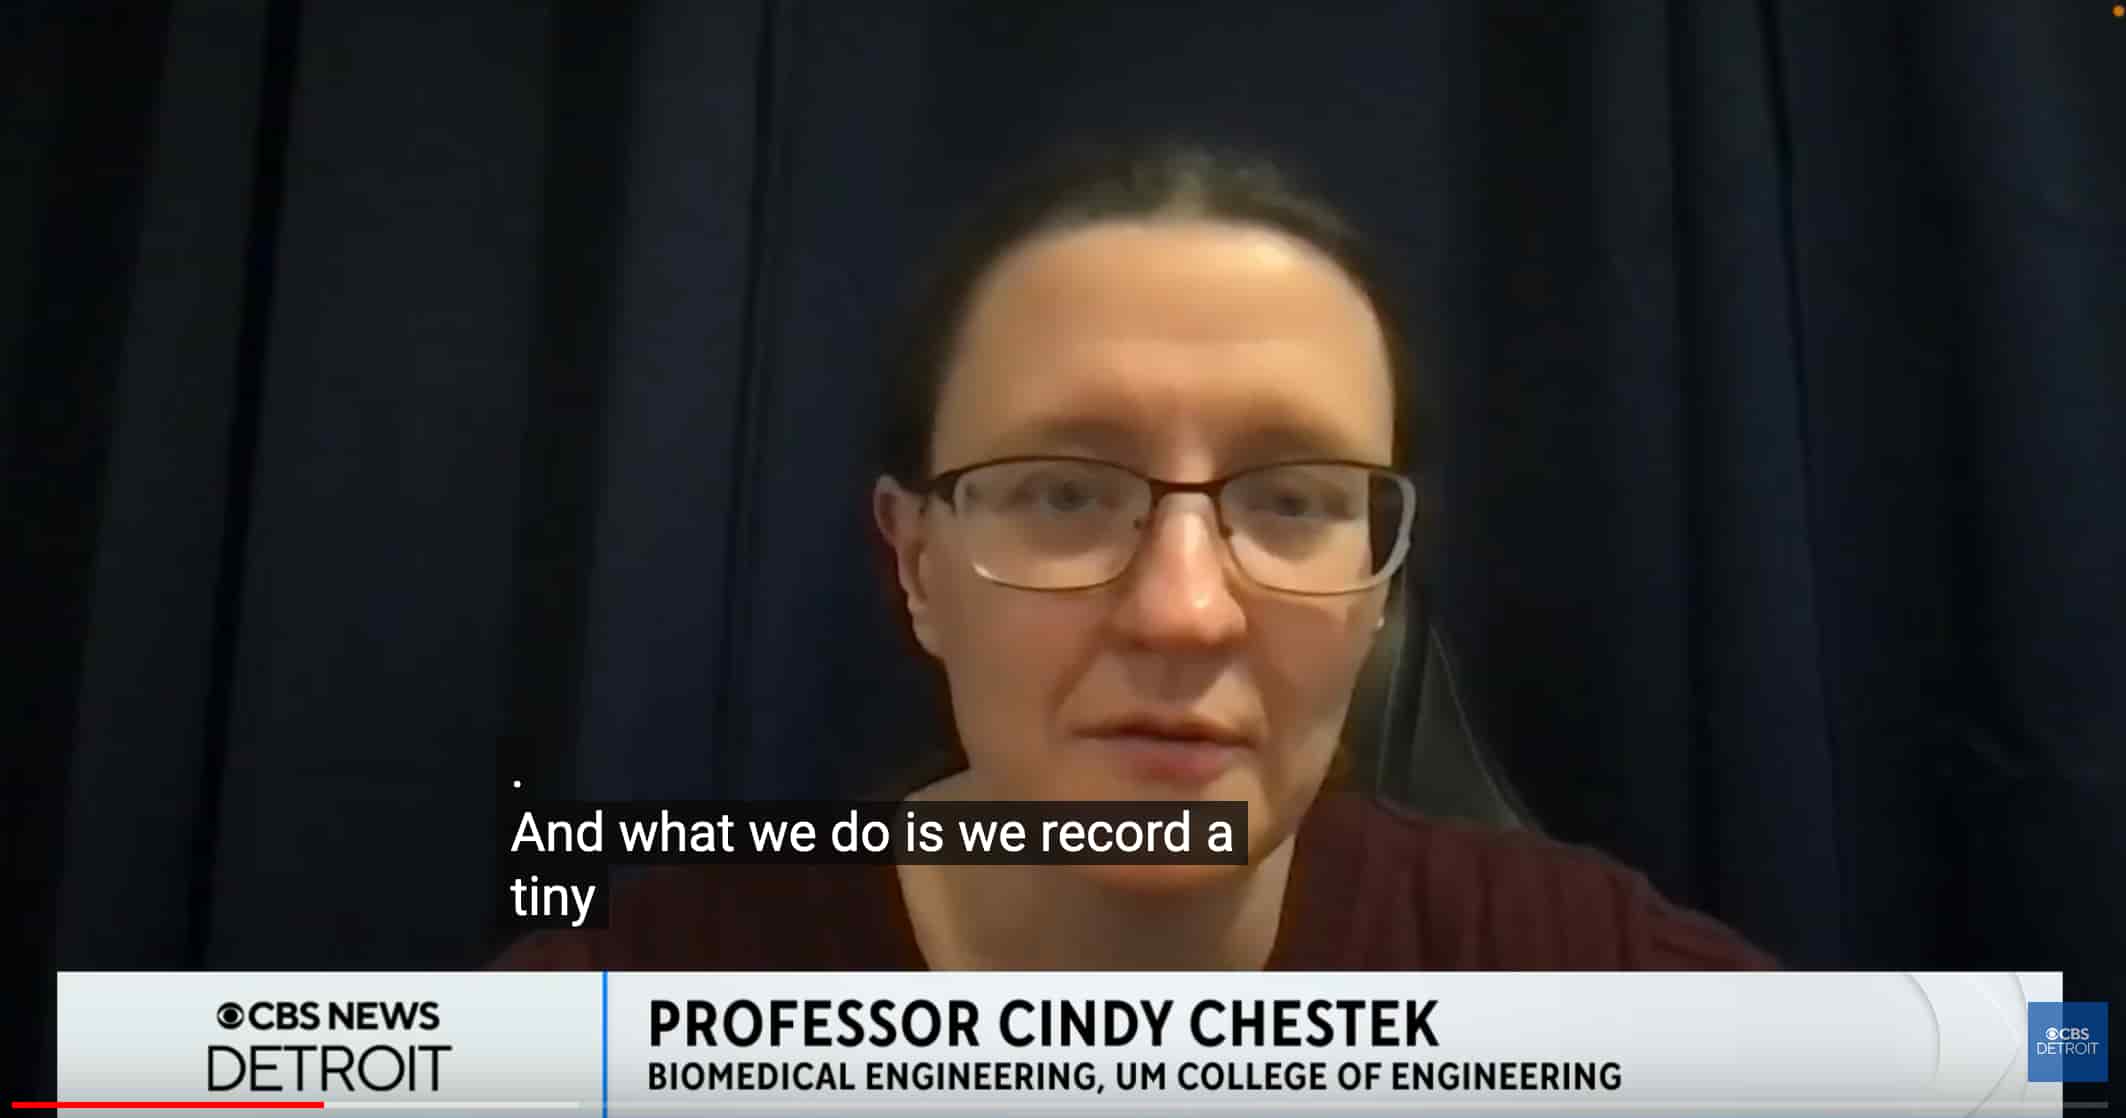 Cindy Chestek on a TV screen